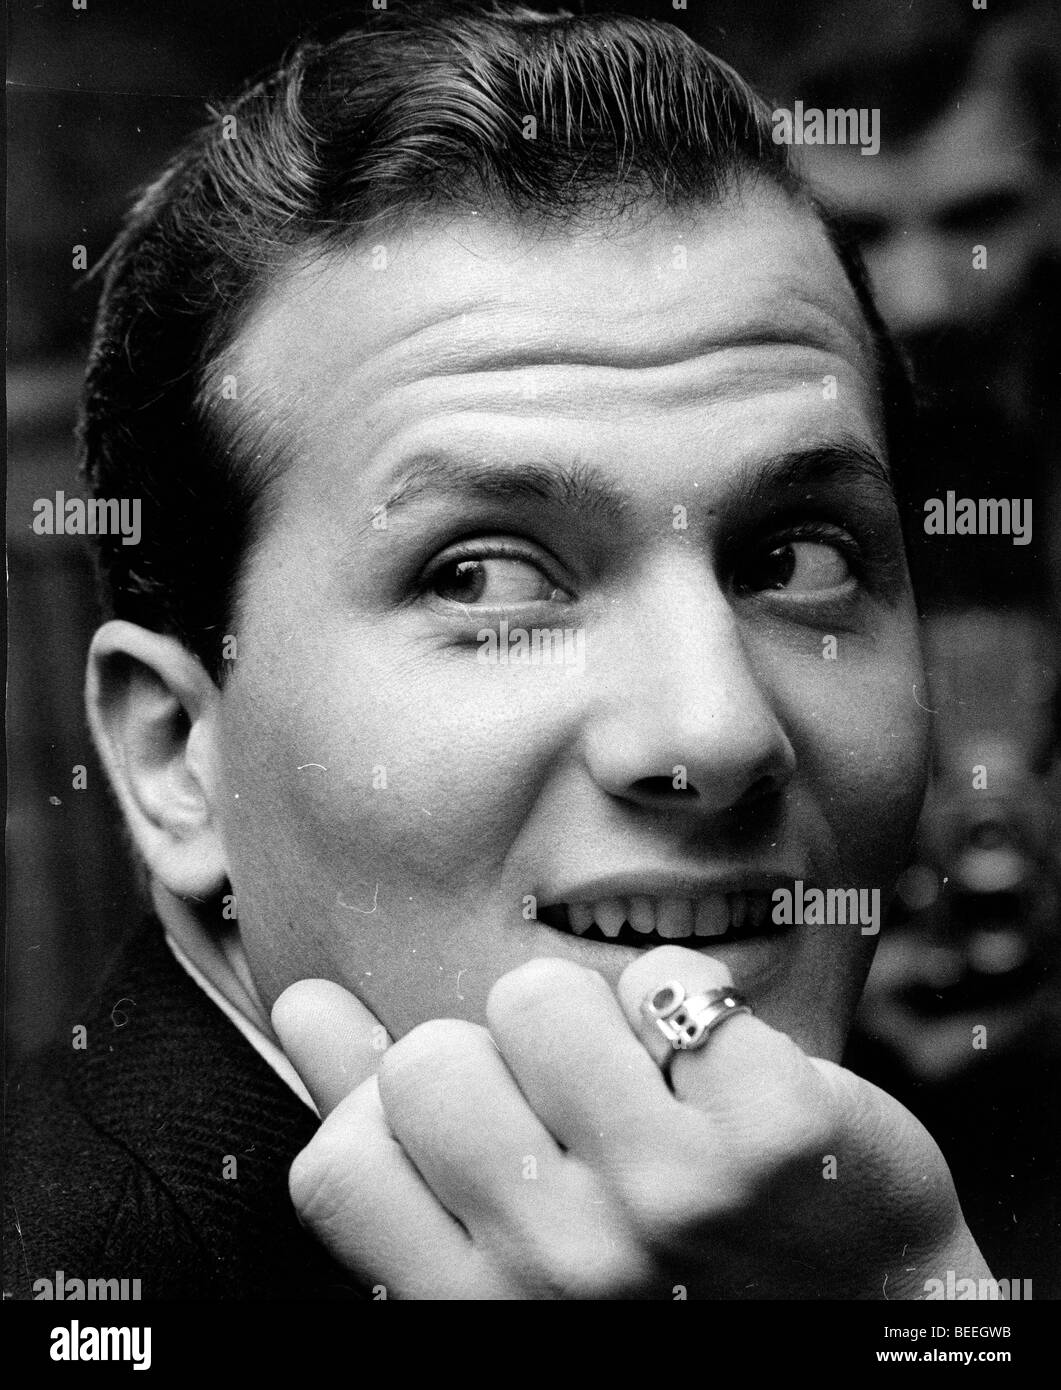 Singer PAT BOONE wearing a ring bearing his initials. Stock Photo